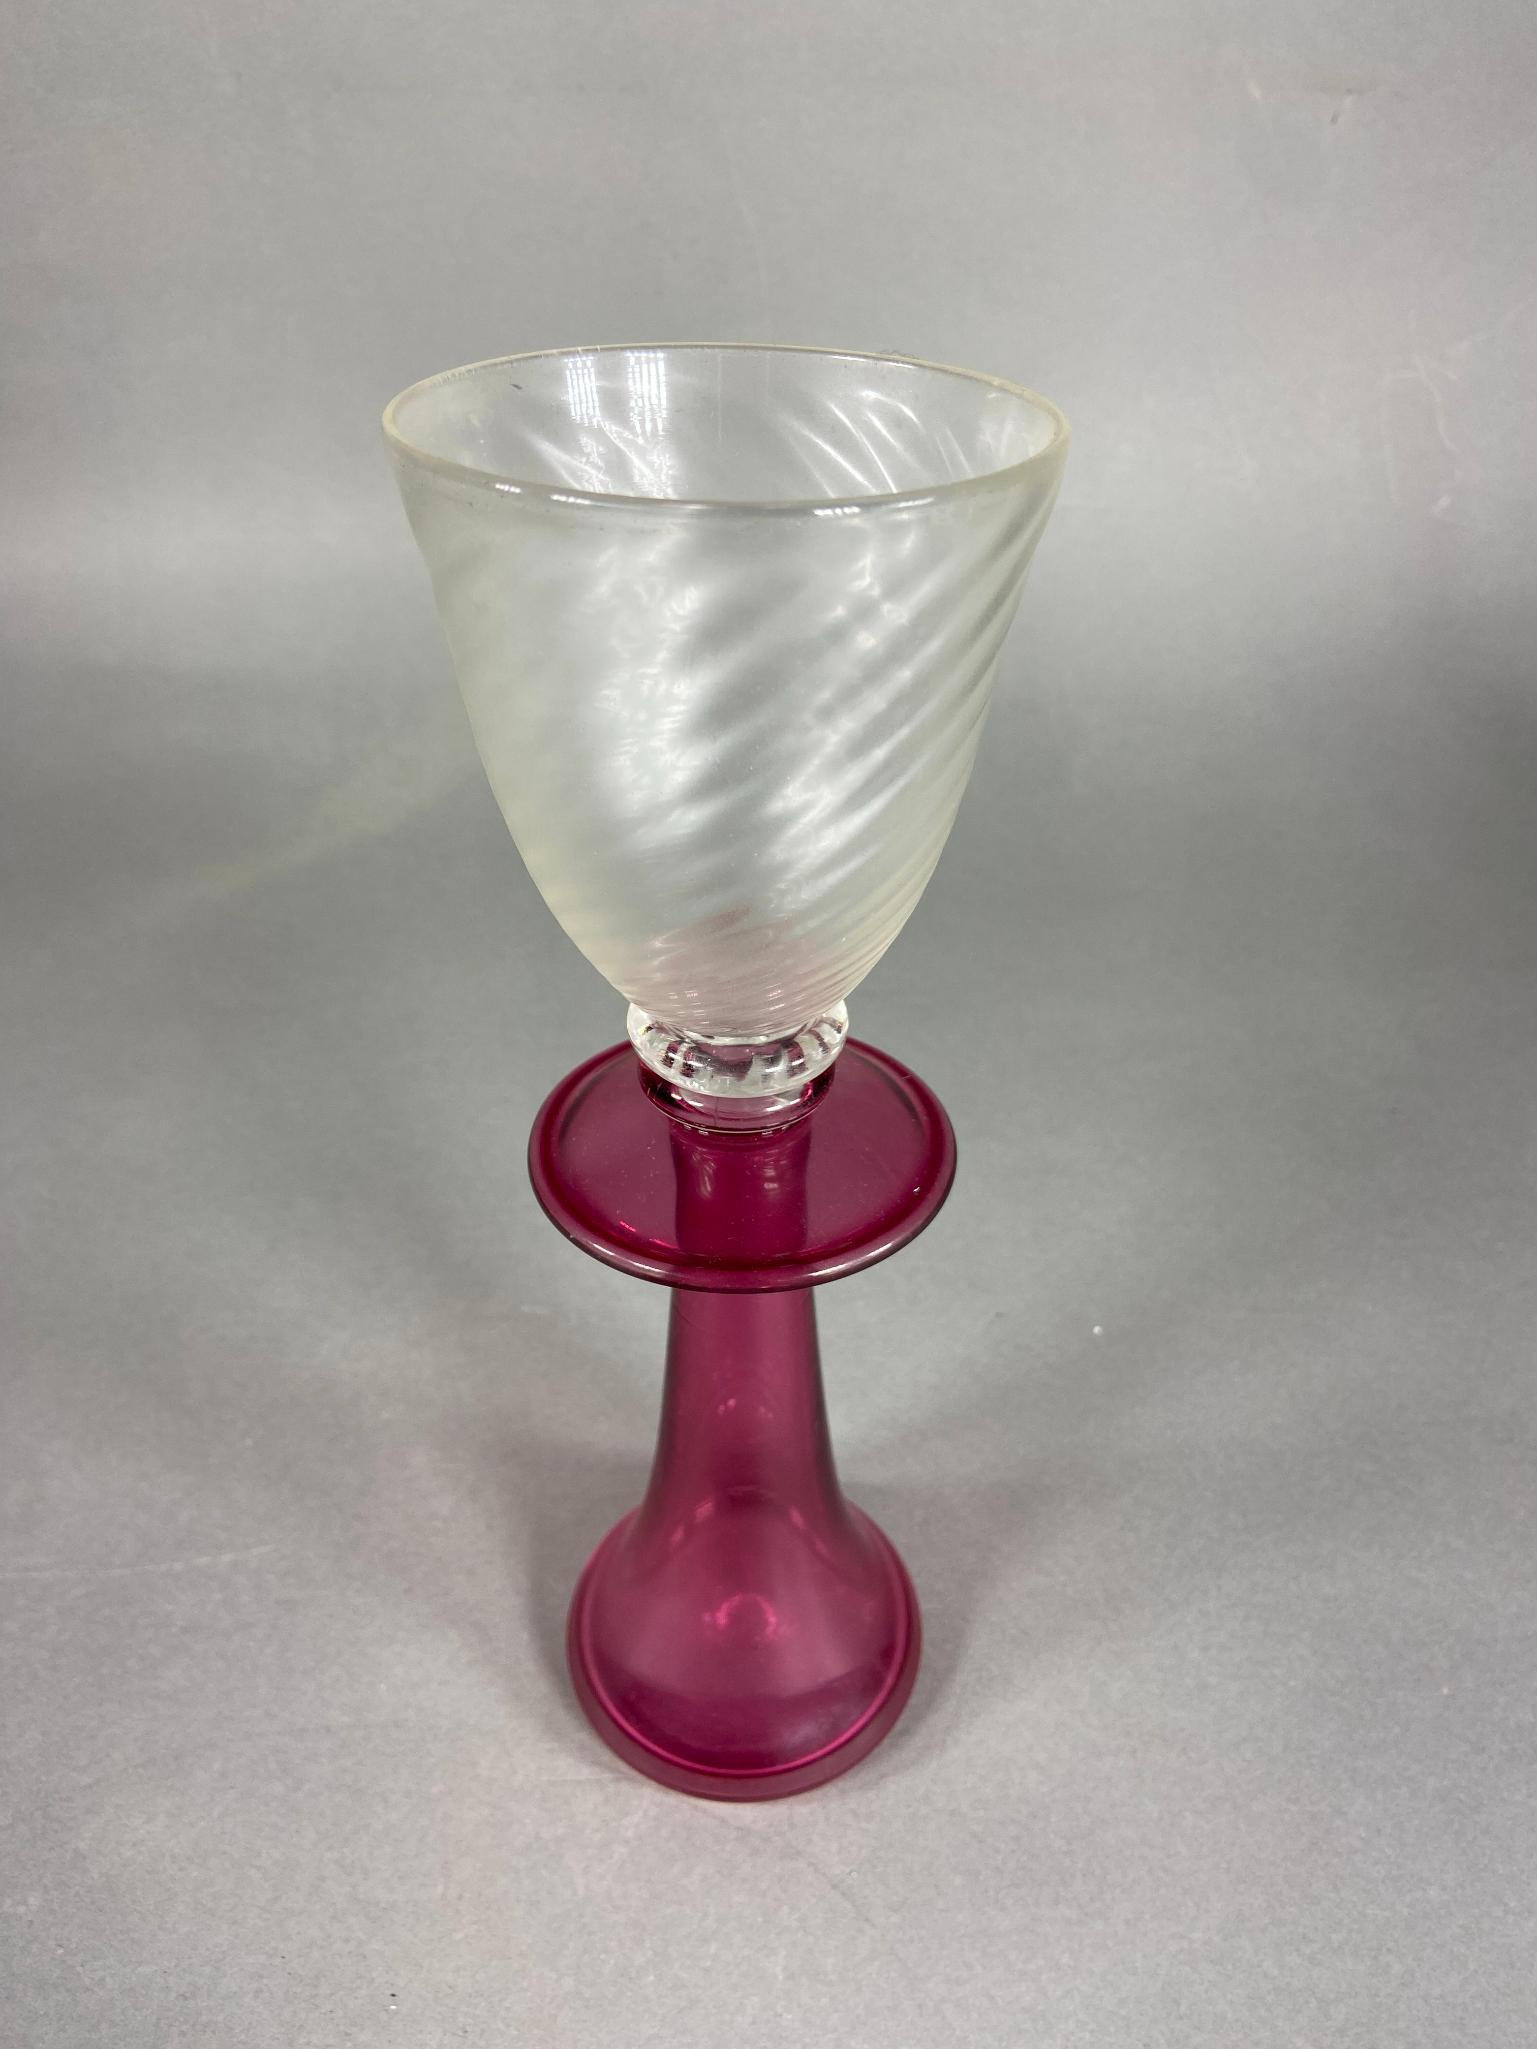 Vintage Art Glass Goblet Unusual Italian Signed